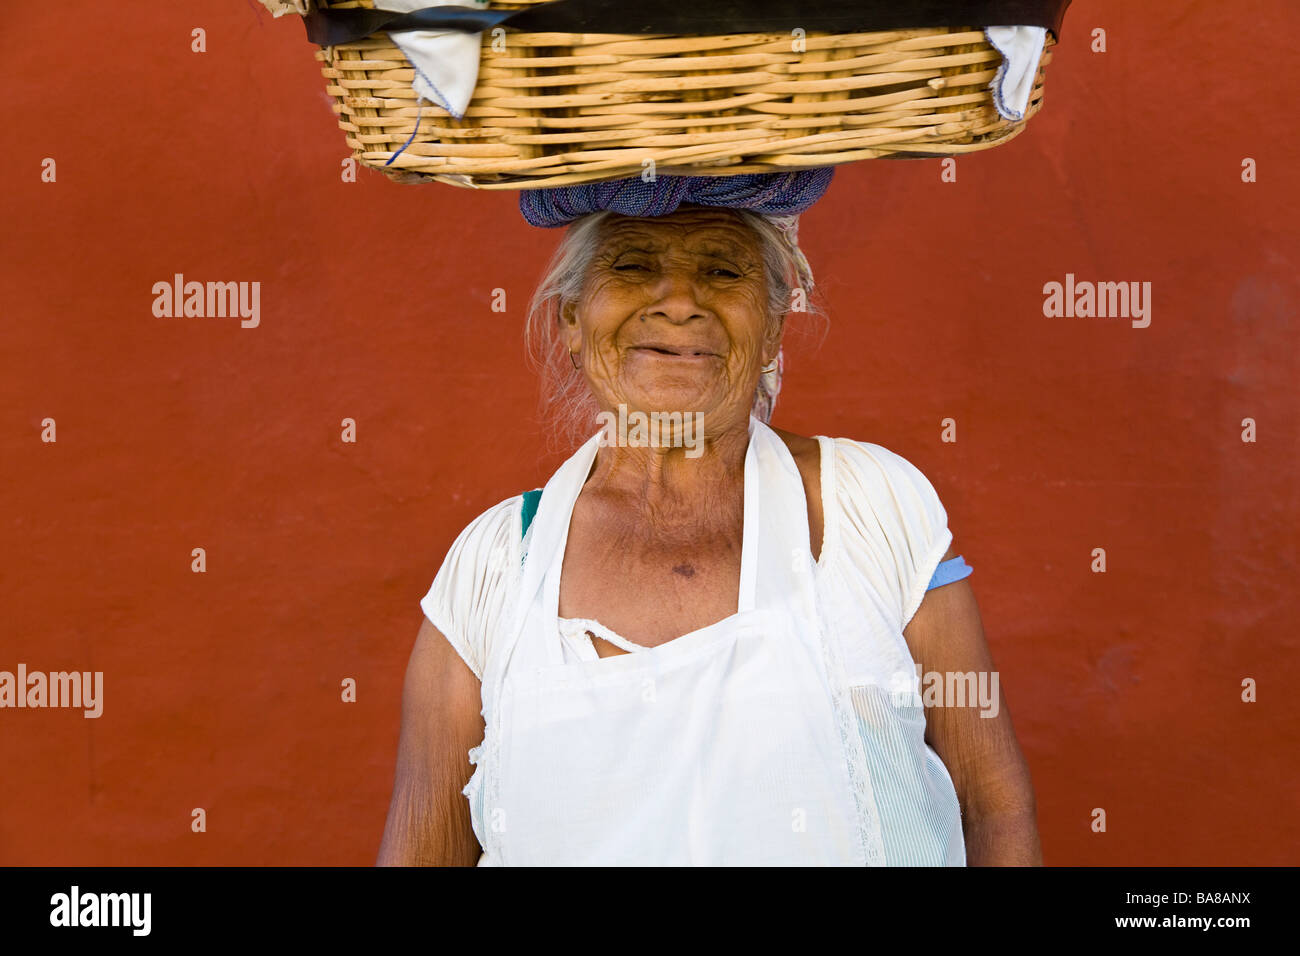 Street vendor with basket on head,Oaxaca, Oaxaca State, Mexico Stock Photo